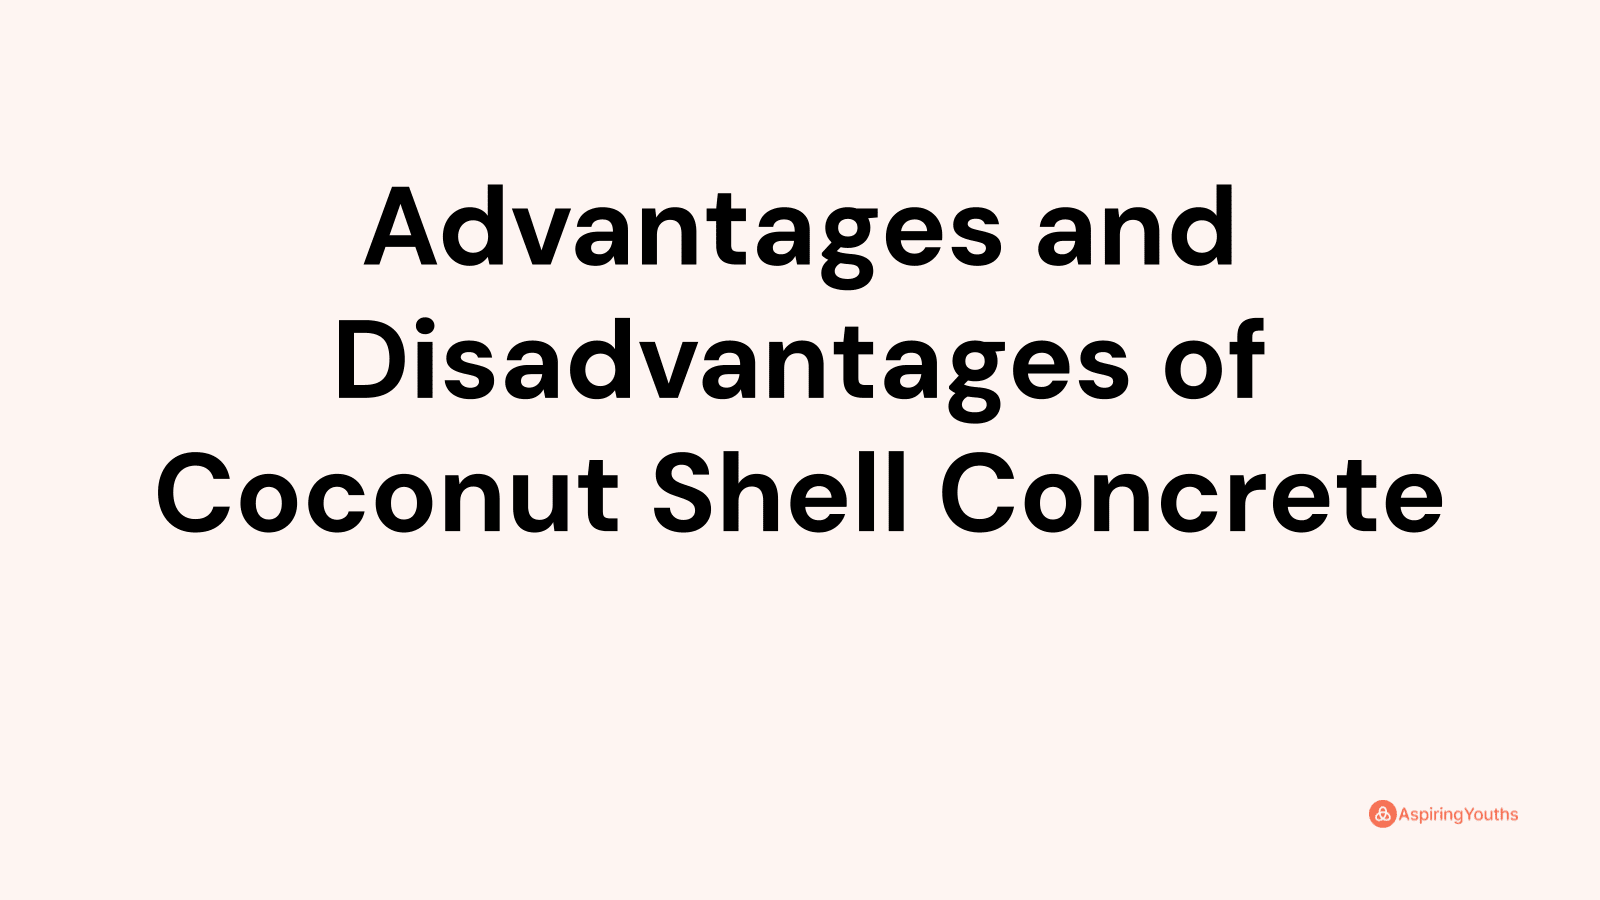 Advantages and disadvantages of Coconut Shell Concrete